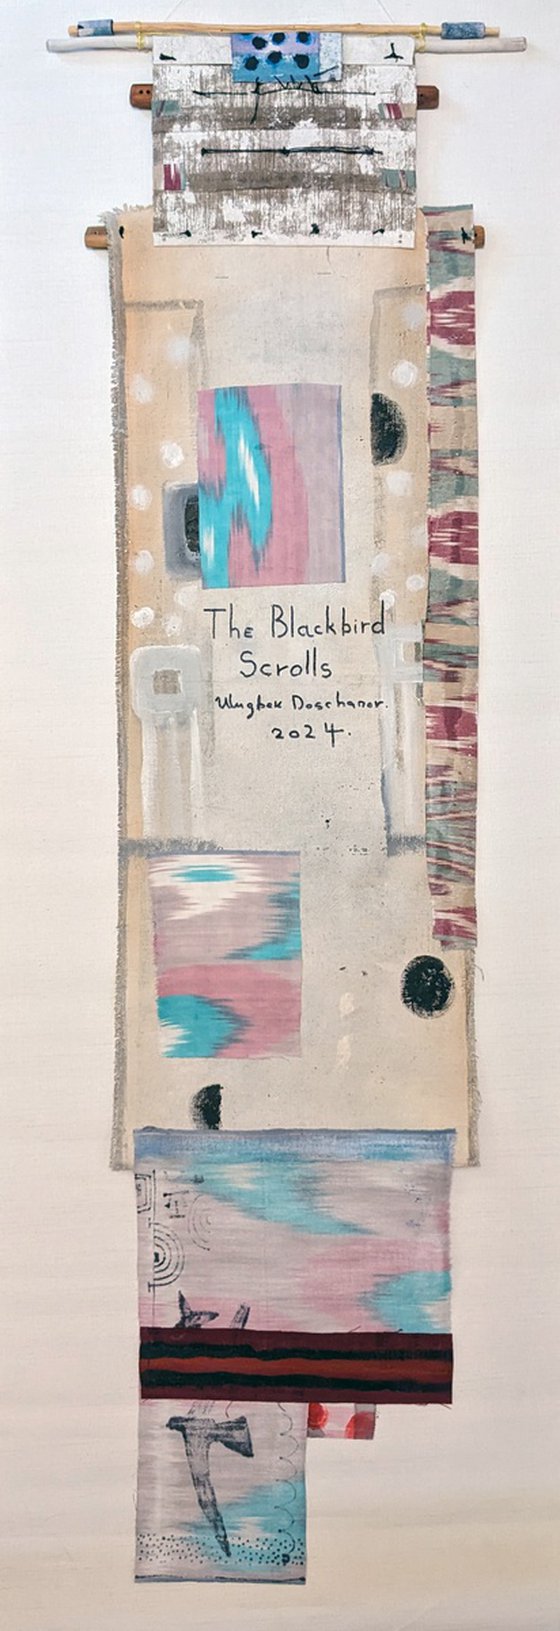 The Blackbird Scrolls